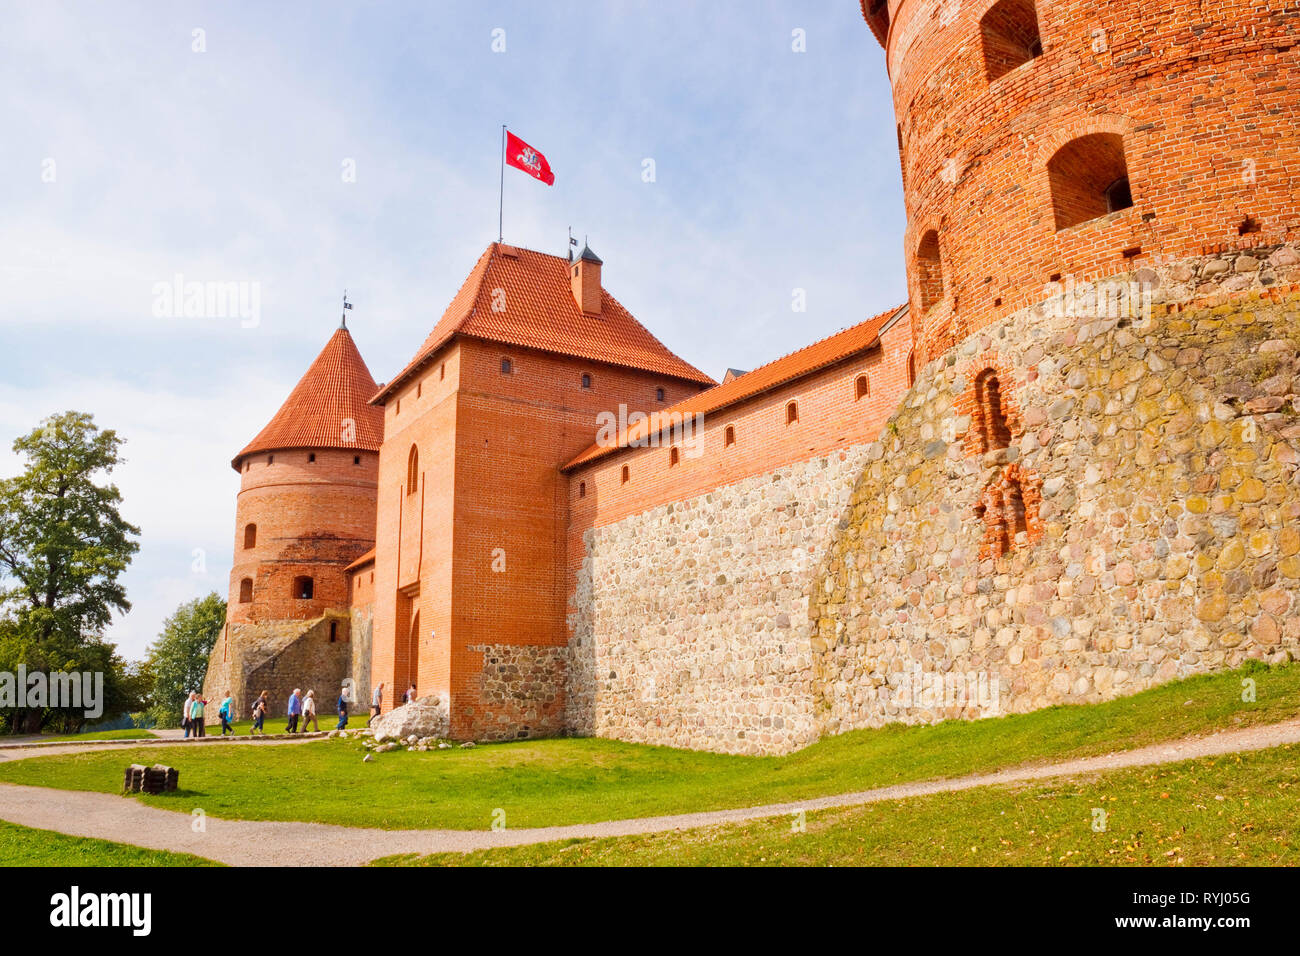 Trakai, Lithuania - September 16, 2015: People entering Trakai Island Castle through the main gate. Entrance and corner towers of Trakai Island Castle Stock Photo